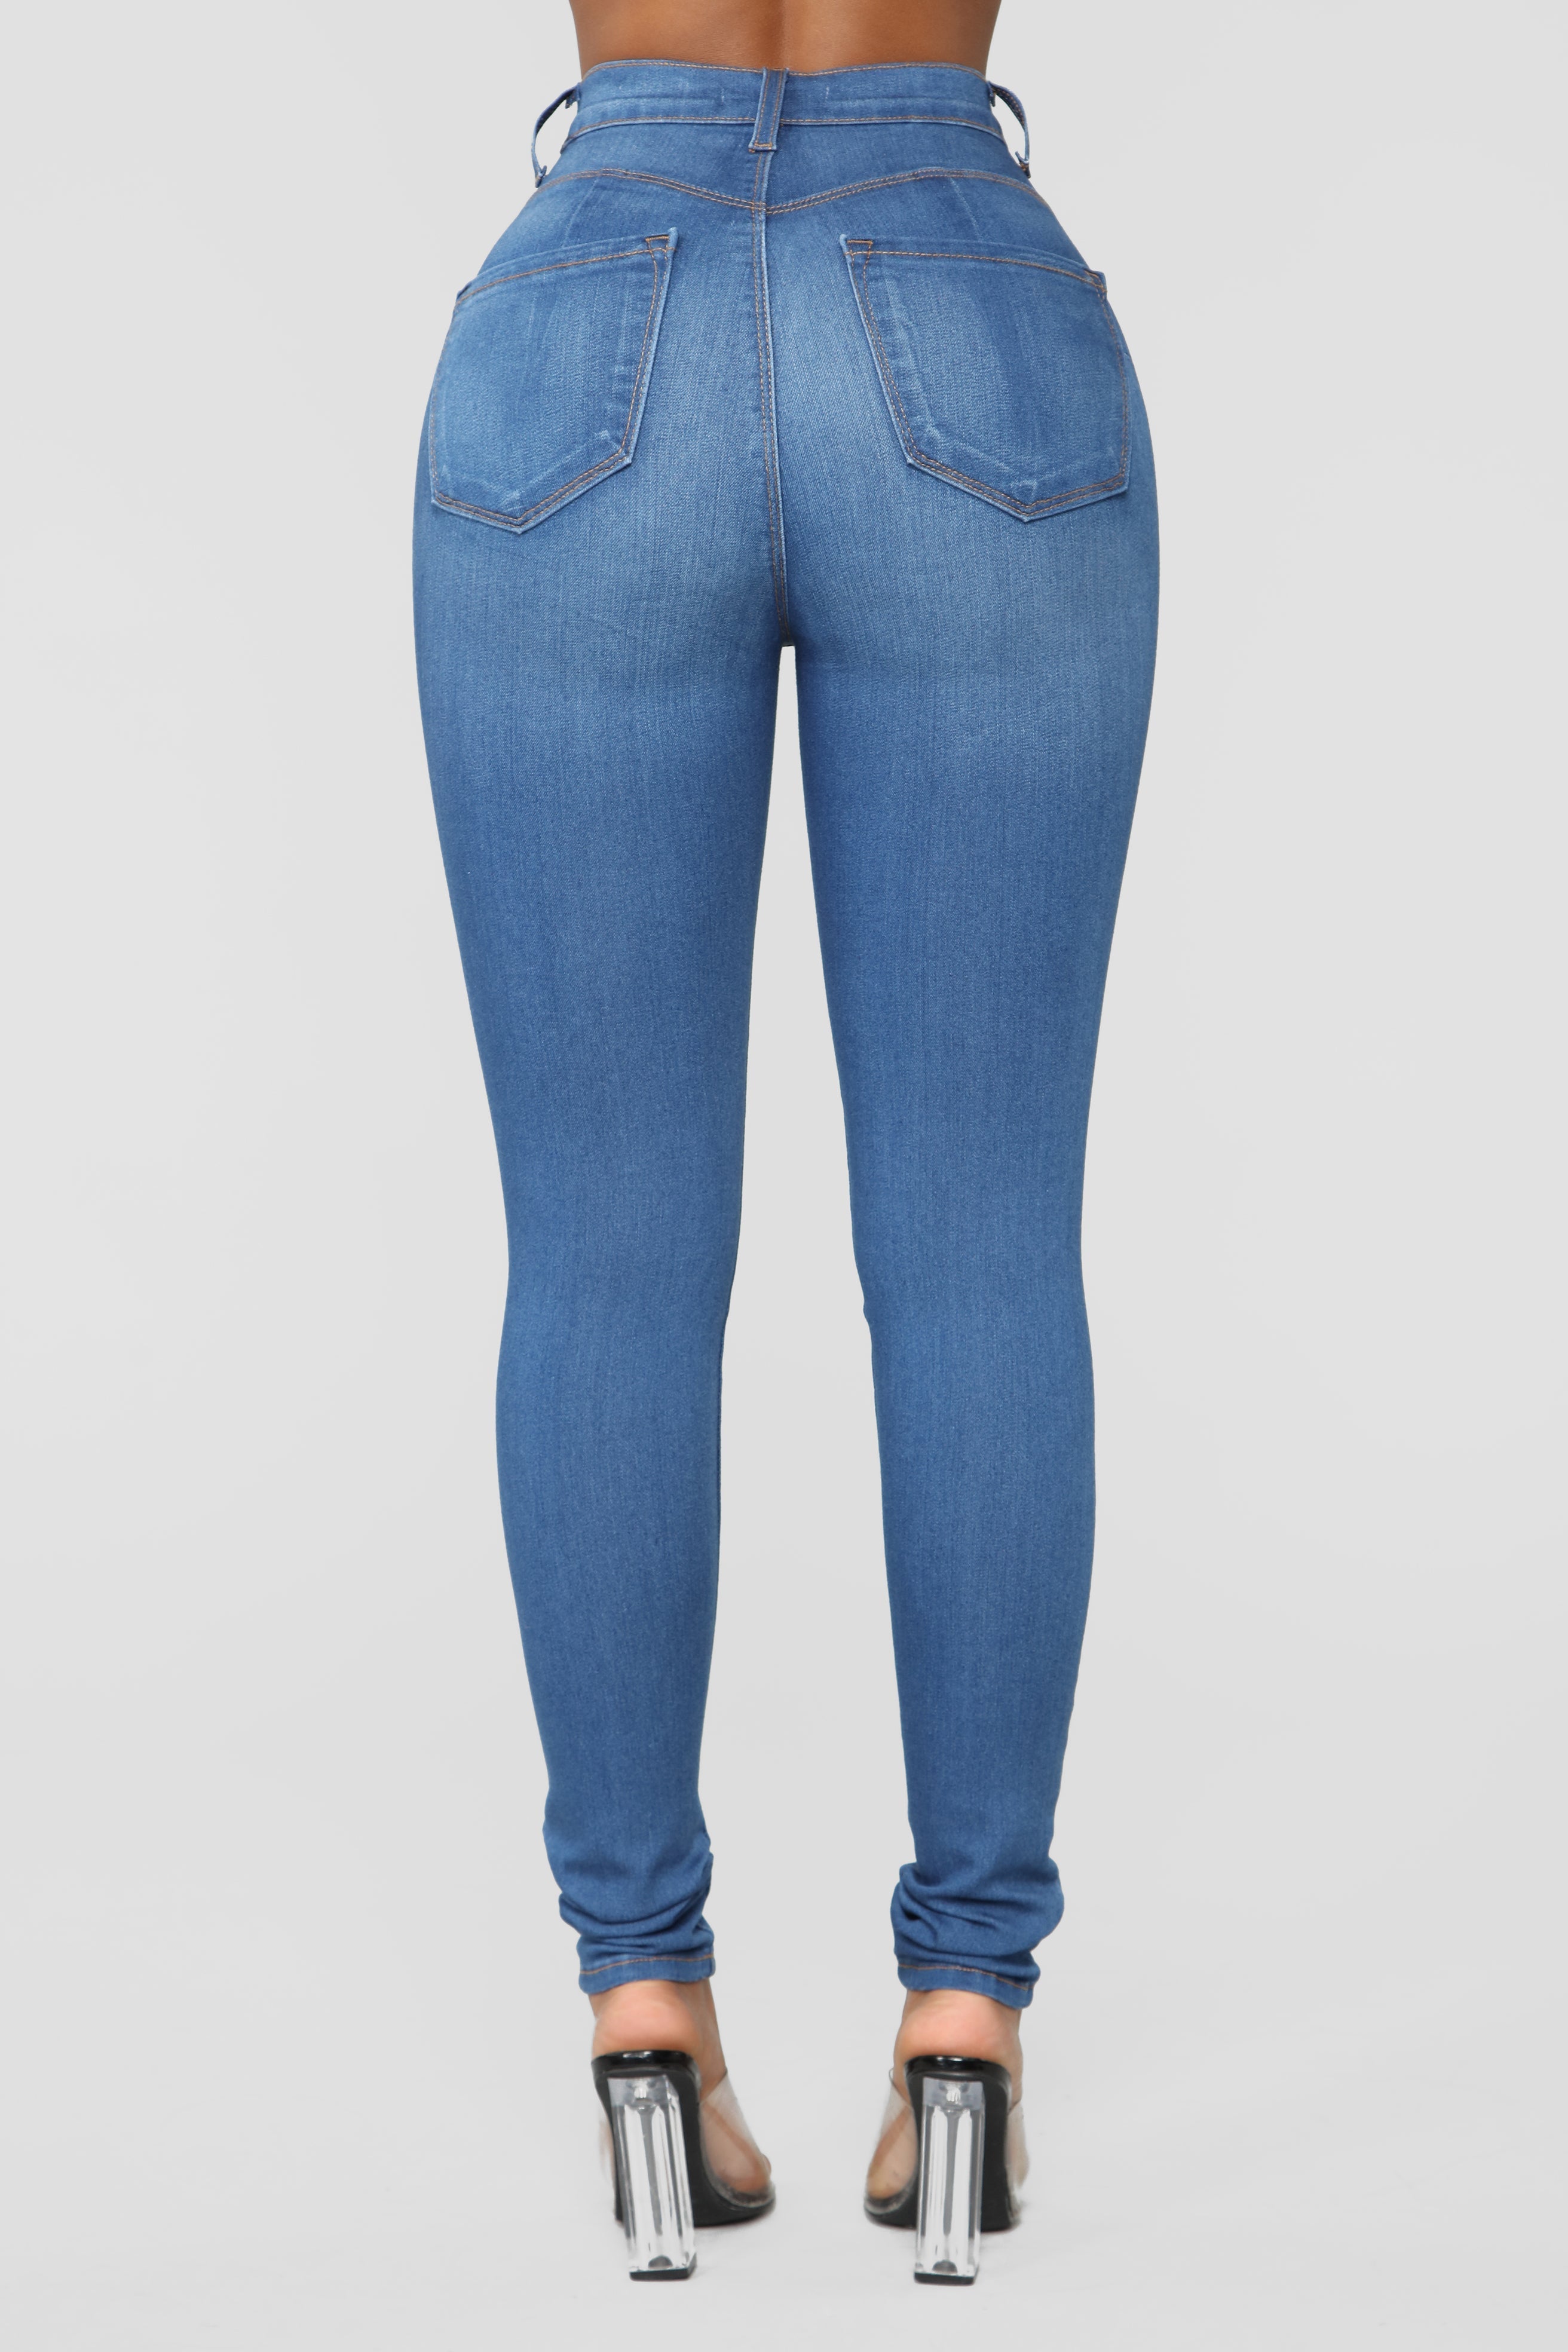 Classic Beauty Skinny Jeans - Medium Blue Wash